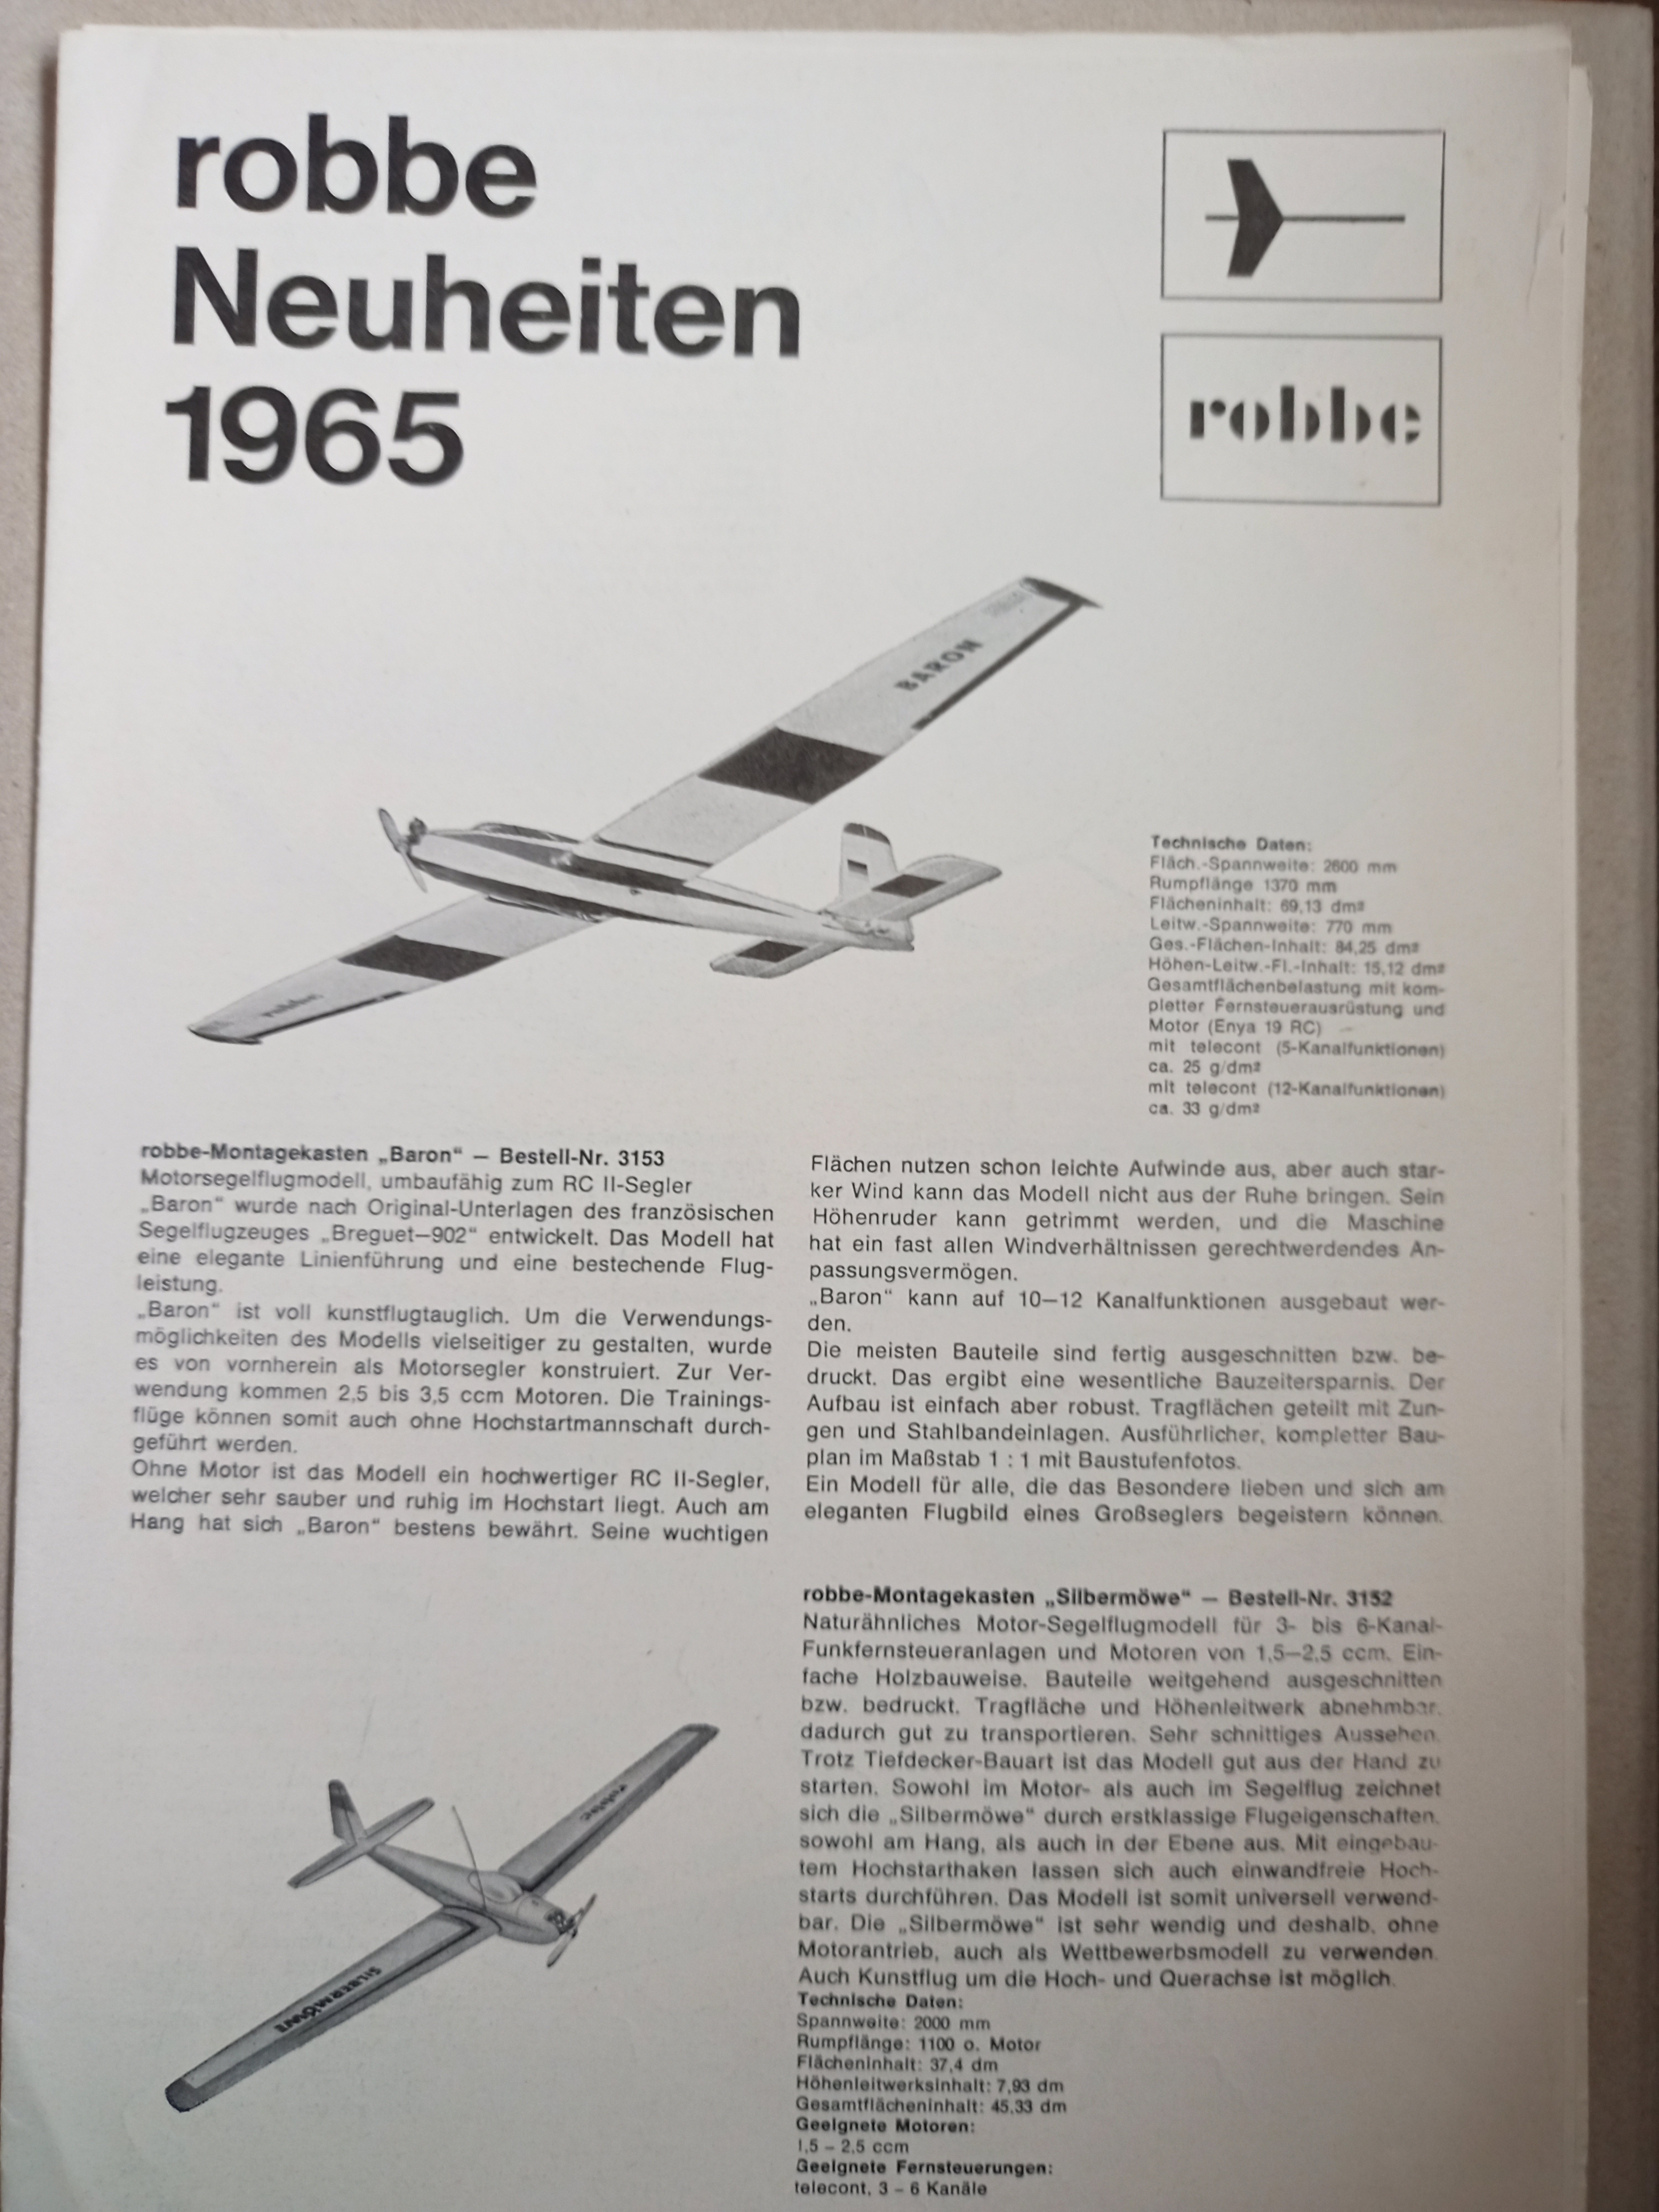 robbe Neuheiten 1966 (Deutsches Segelflugmuseum mit Modellflug CC BY-NC-SA)